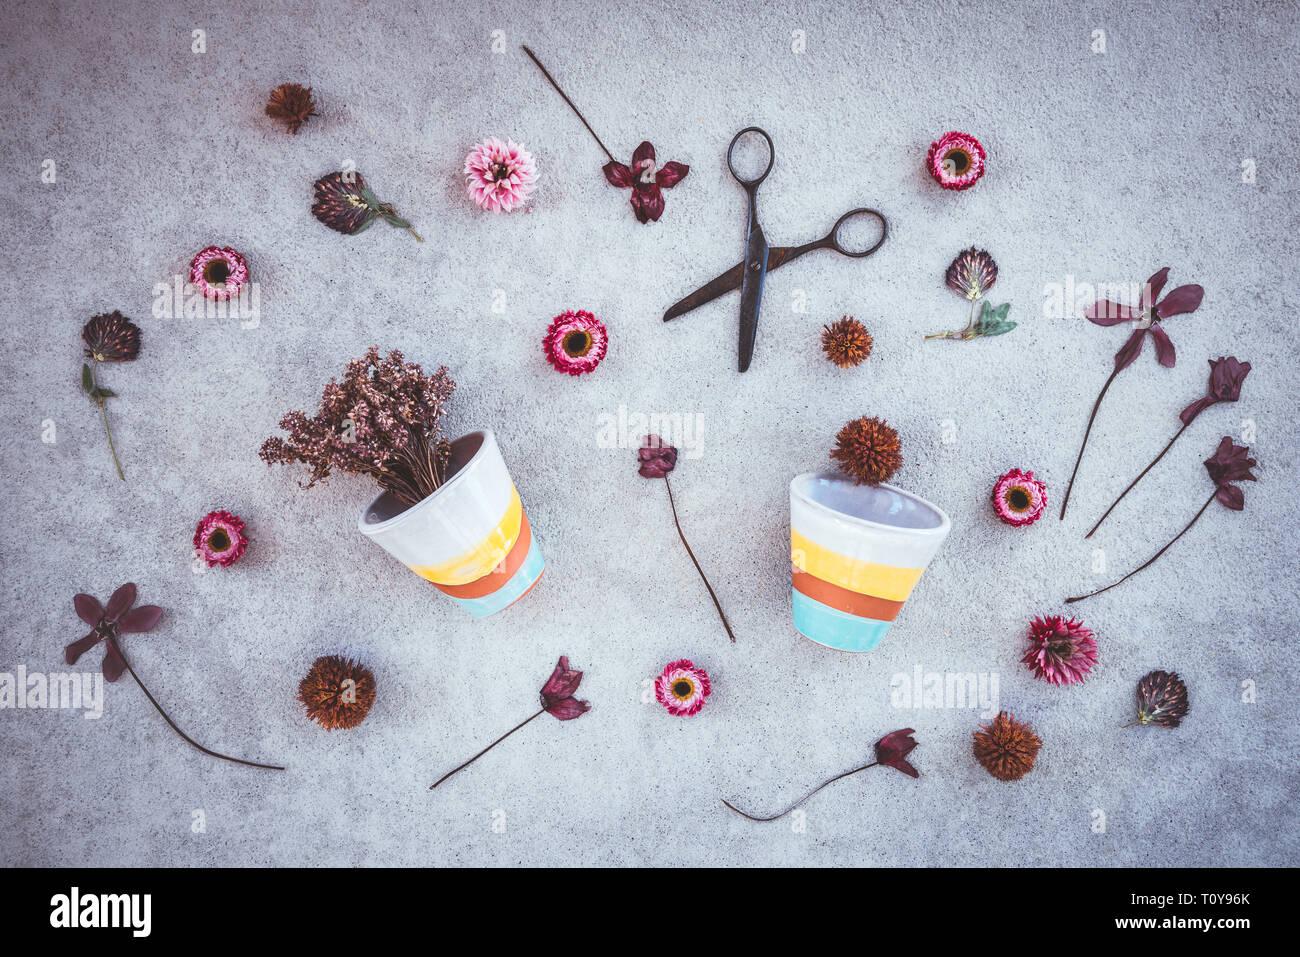 Flowers, rusty scissors and ceramic flowerpots on dark concrete background. Stock Photo